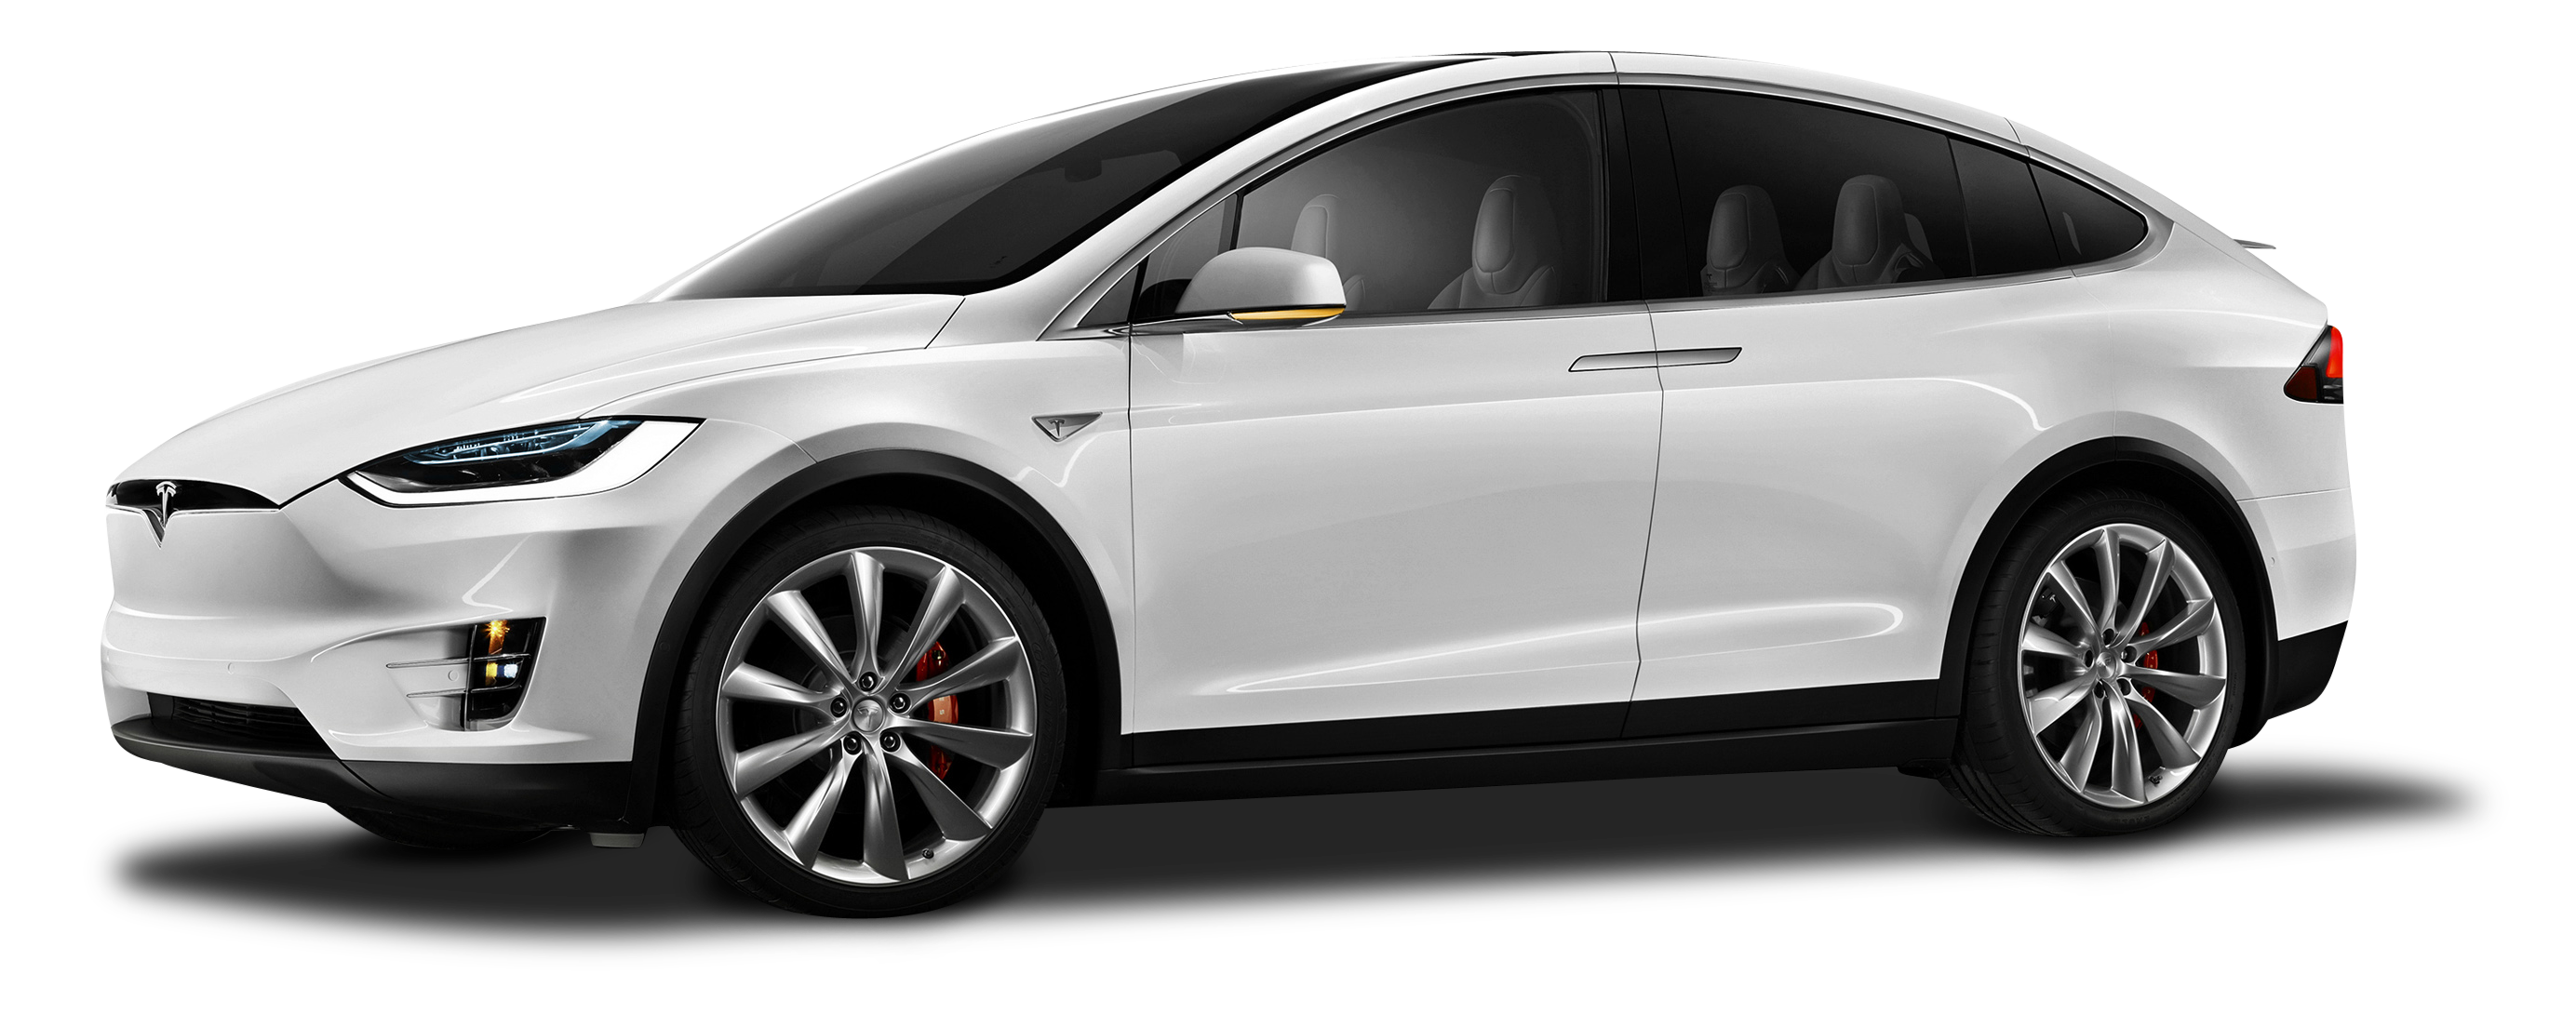 Beyaz Tesla araba PNG Izole dosya